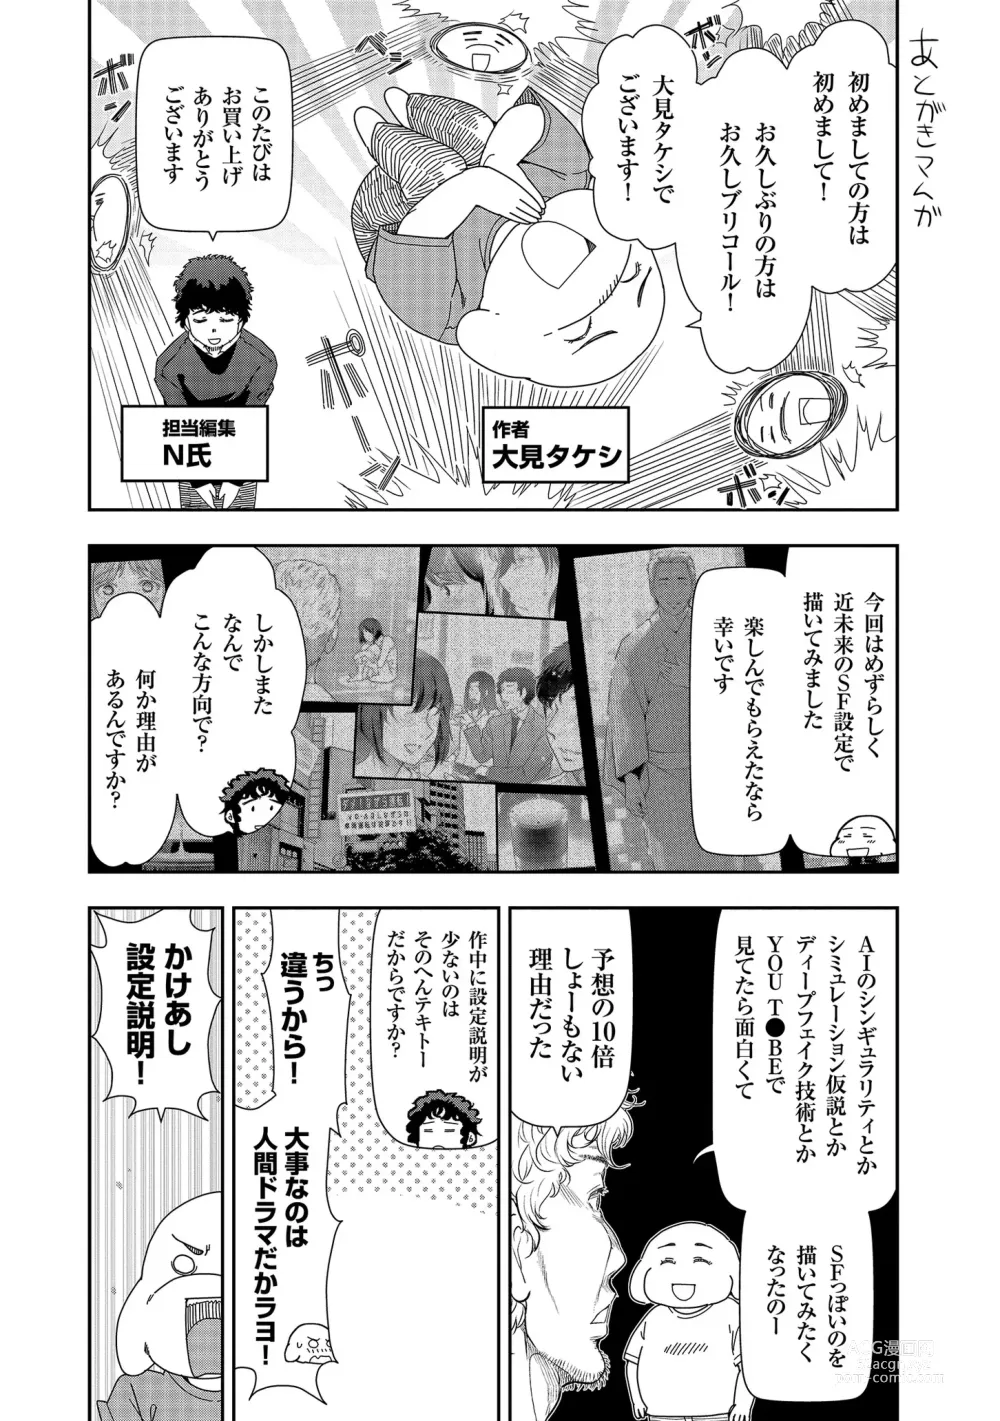 Page 181 of manga Shiawase no Kuni